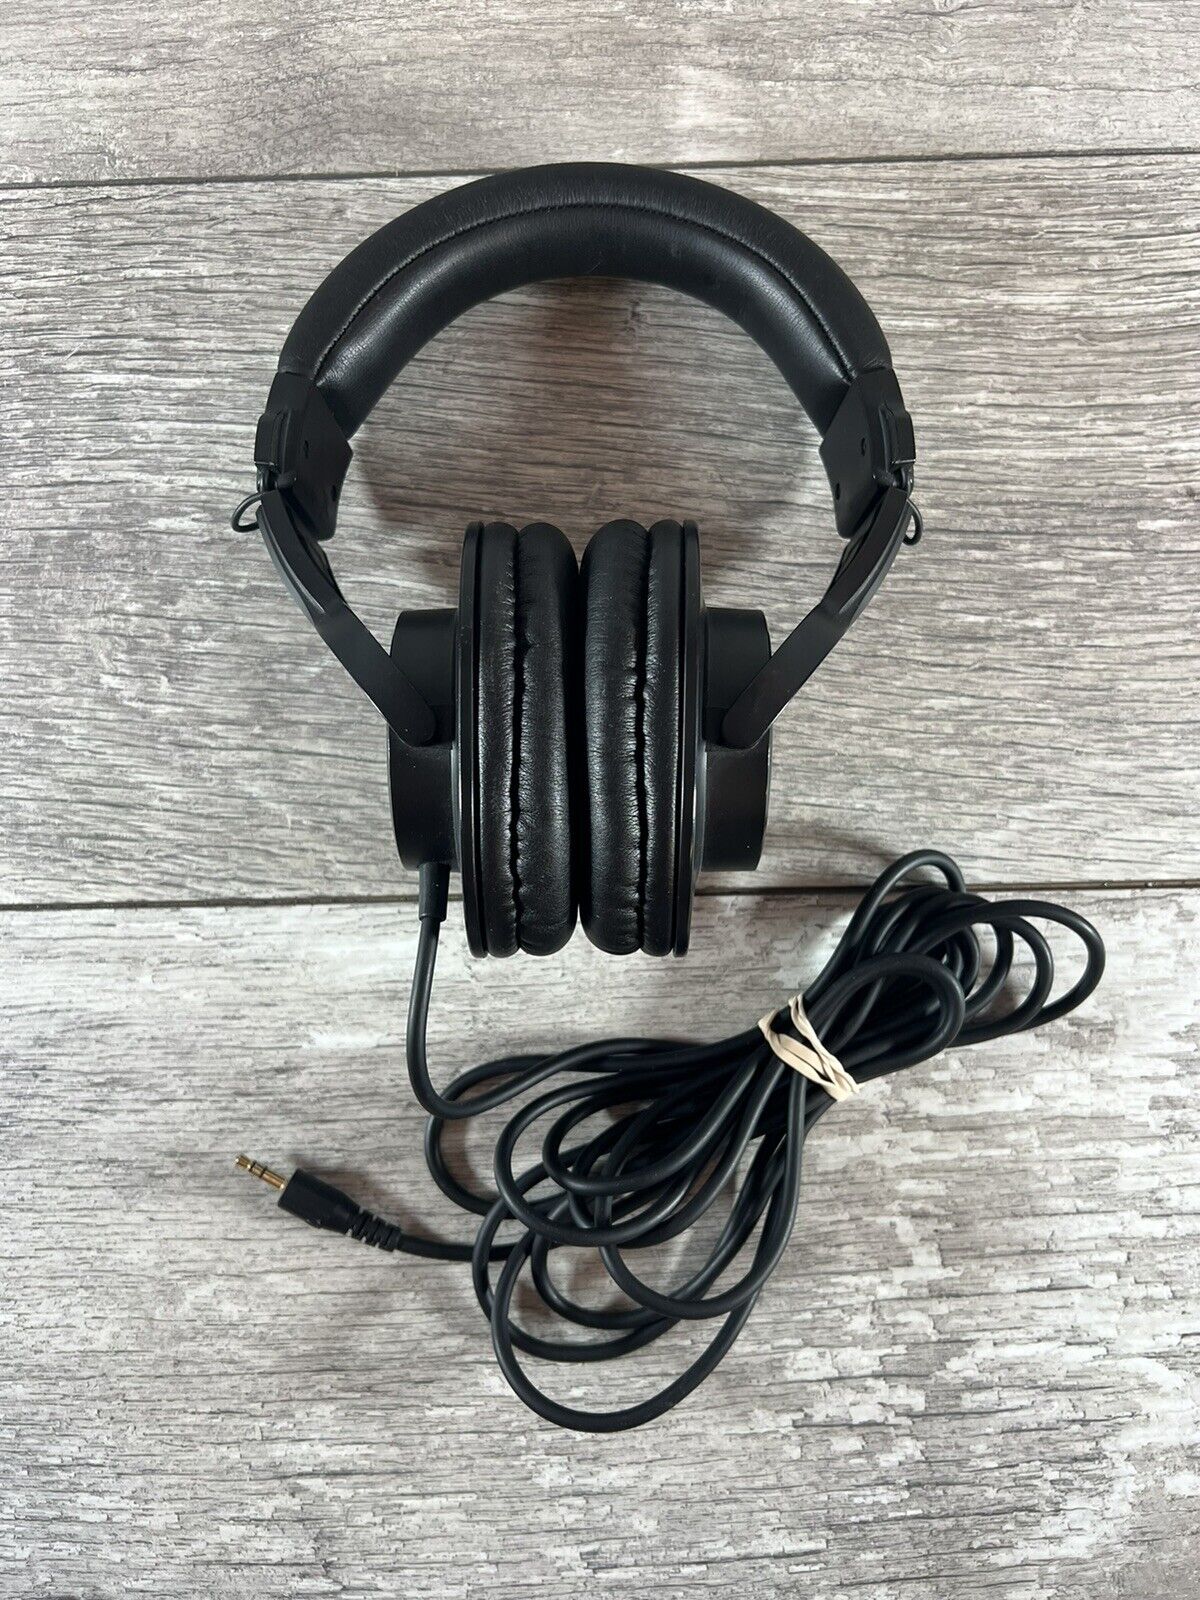 Audio-Technica ATH-M20X On-Ear Monitor Studio Headphones